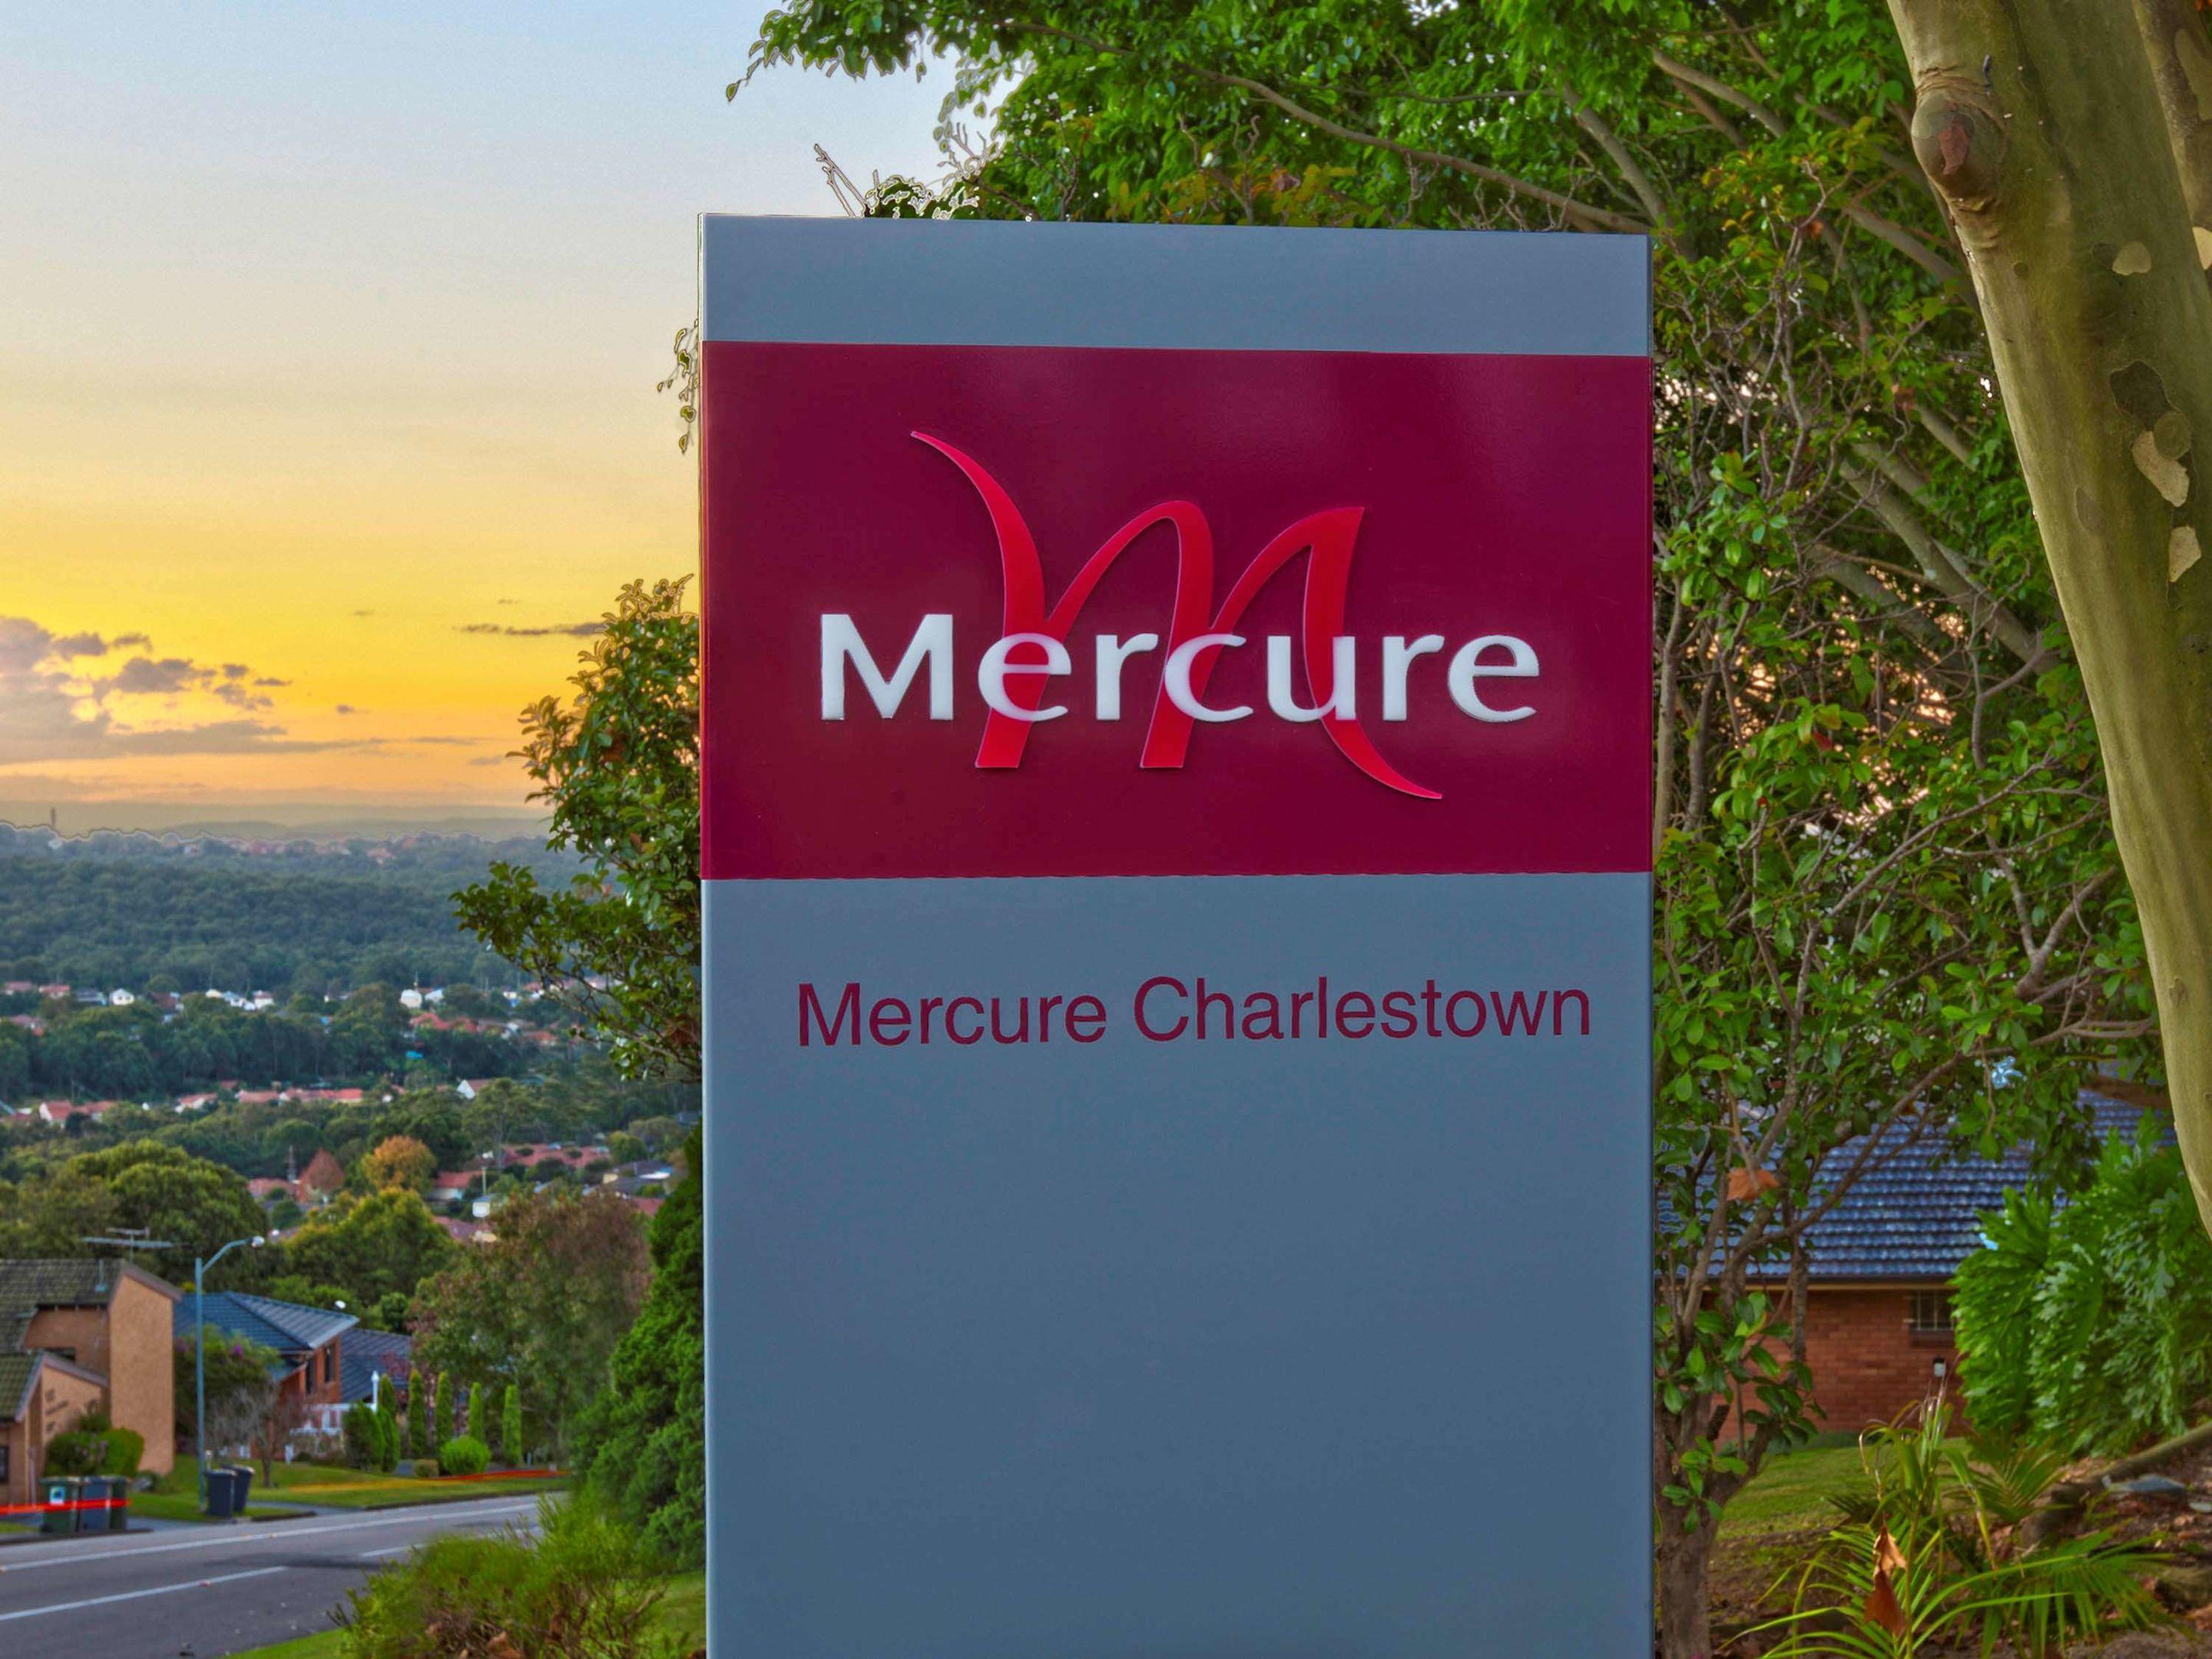 Mercure Charlestown